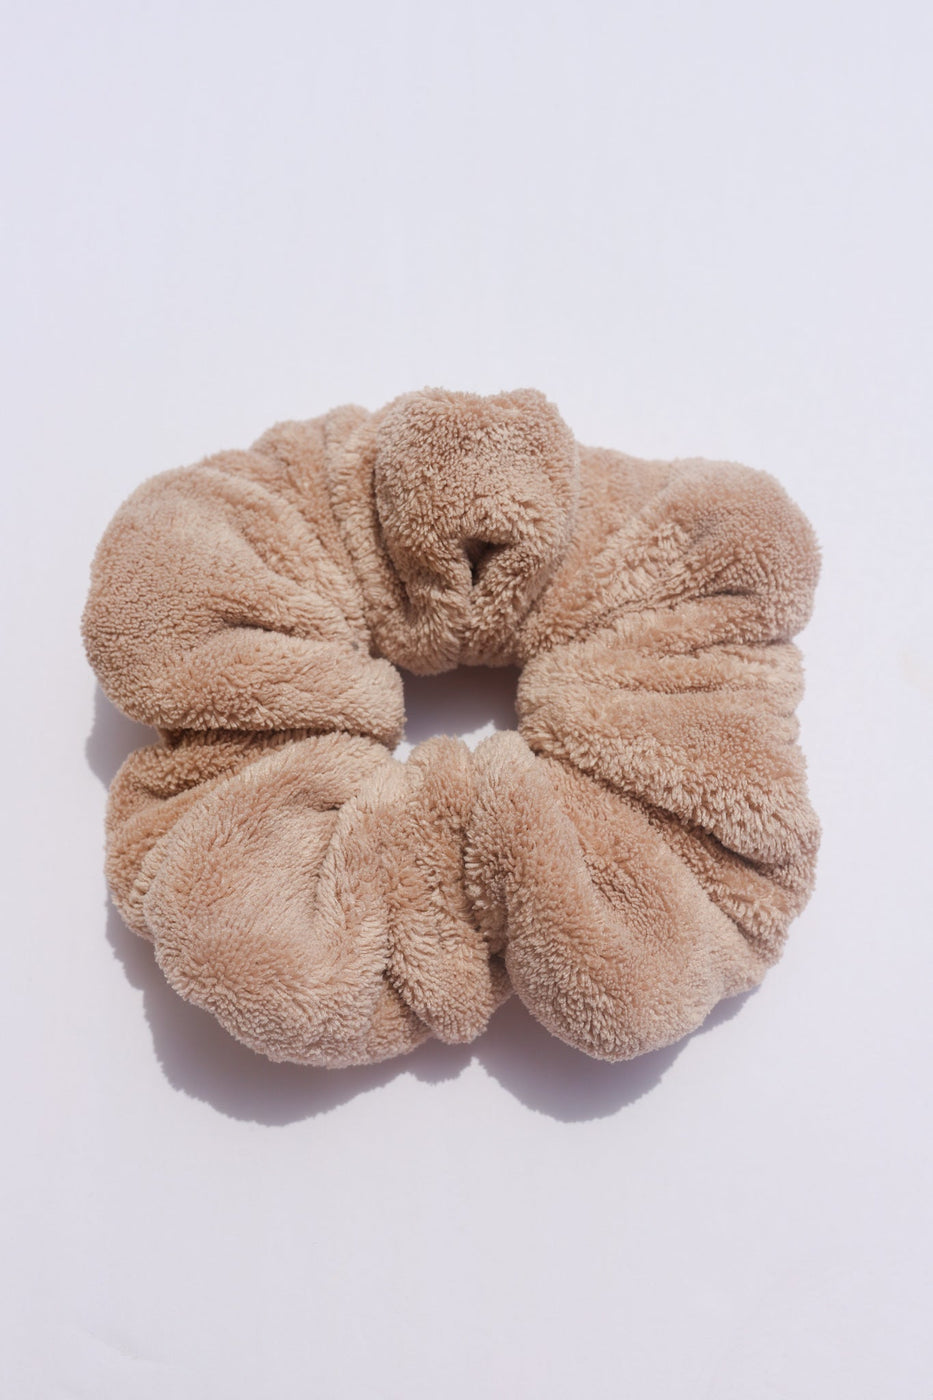 a brown hair scrunchie on a white surface